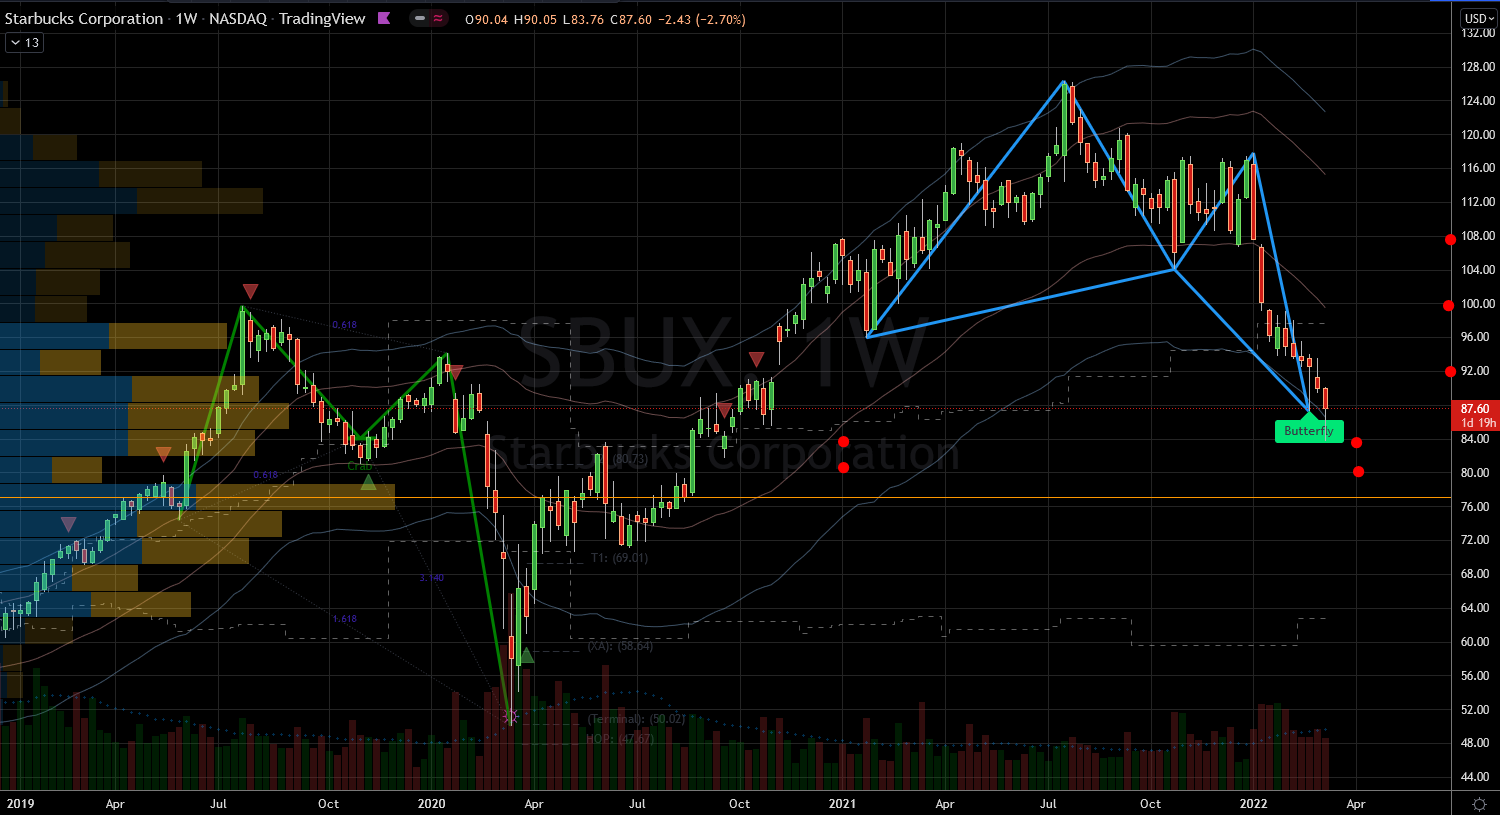 Restaurant Stocks to Buy: Starbucks (SBUX) Stock Chart Showing Potential Base